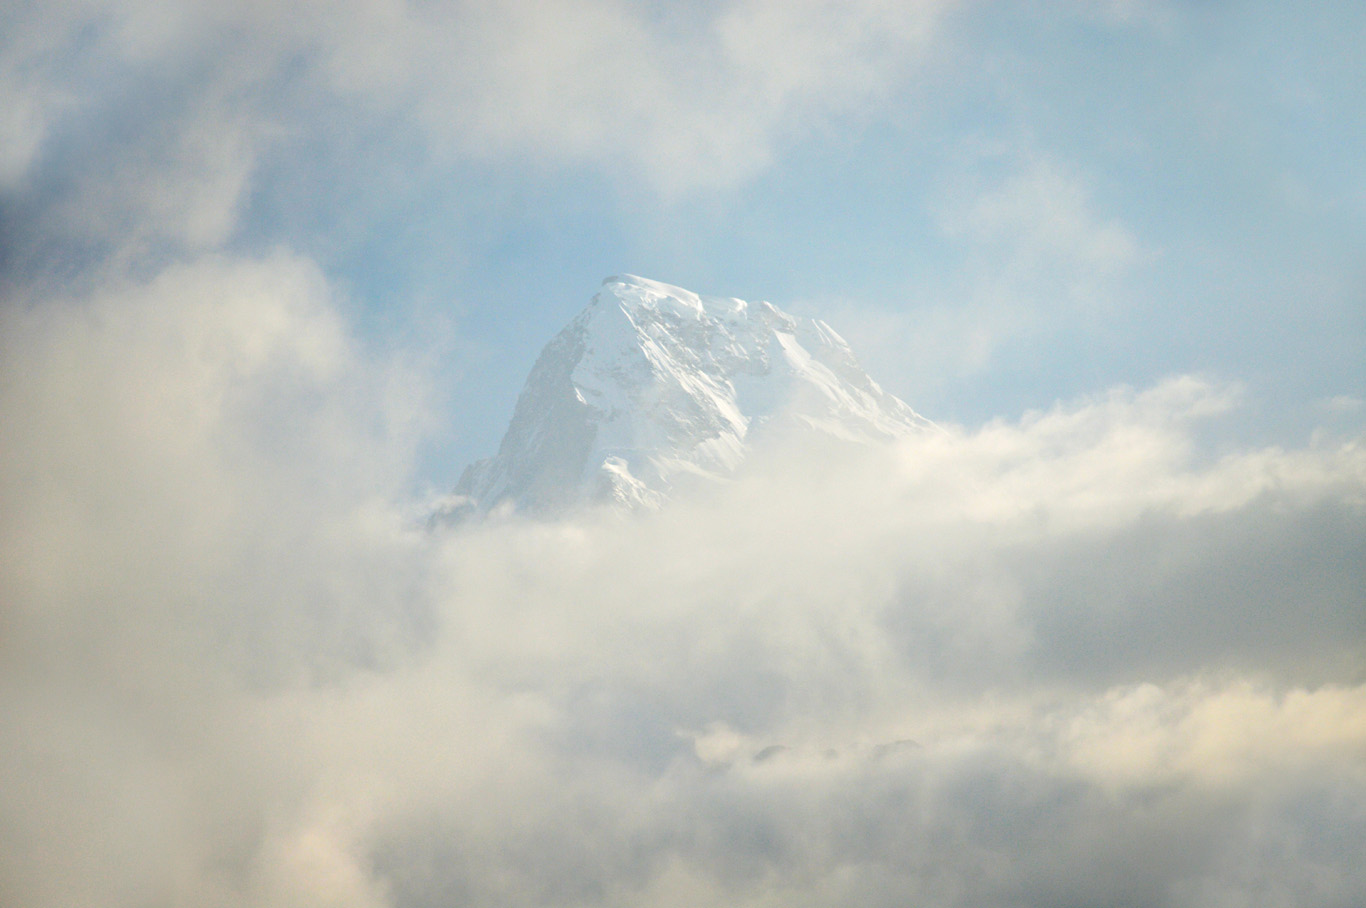 Annapurna Range Loop Trek To Poon Hill, Nepal - Day 2 - Trek From ...